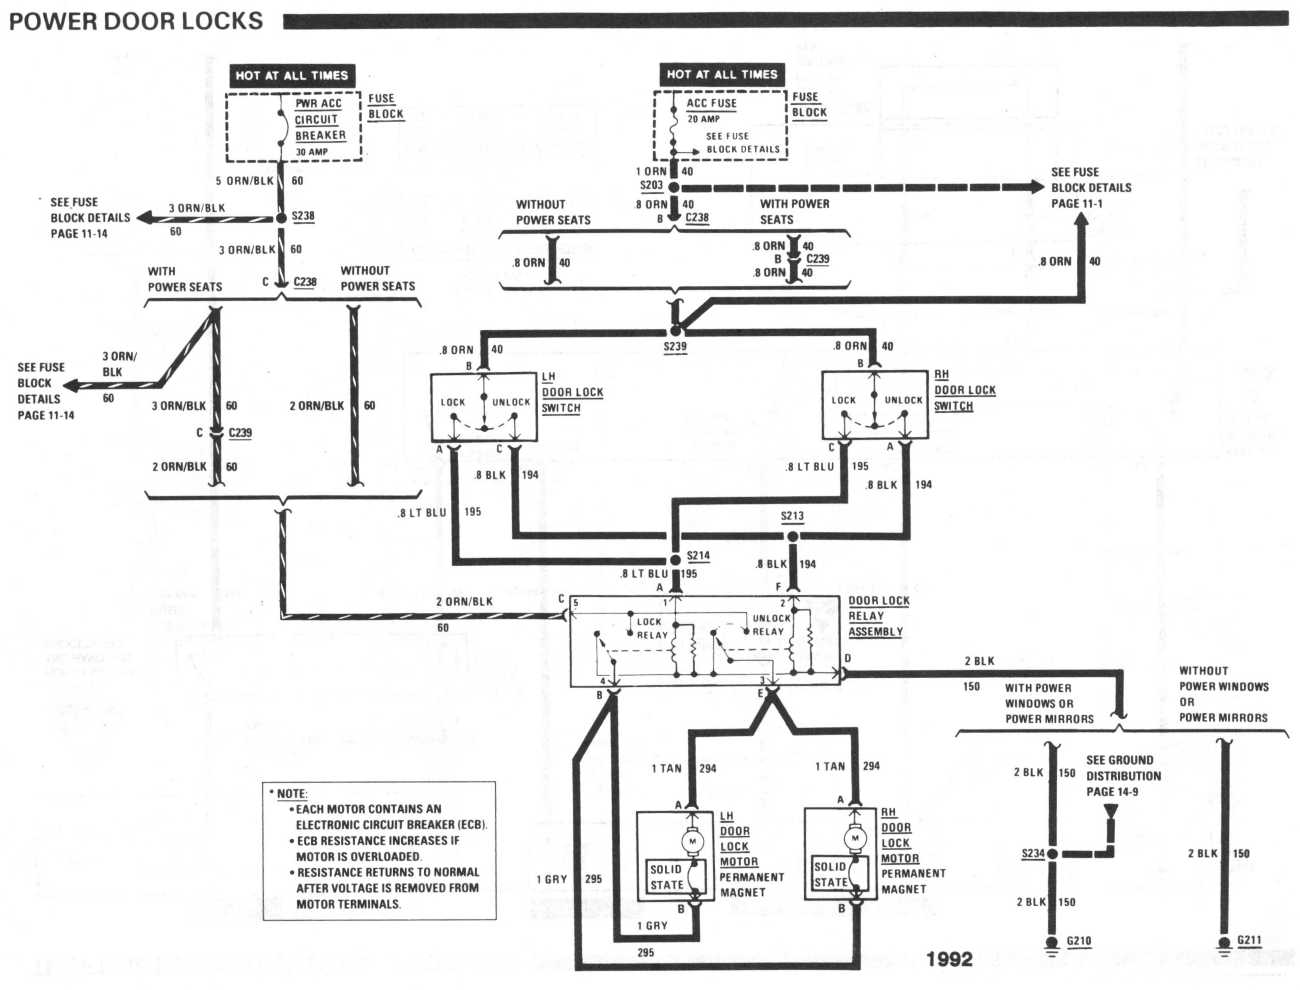 92 Honda accord electronic door lock wiring diagram #5